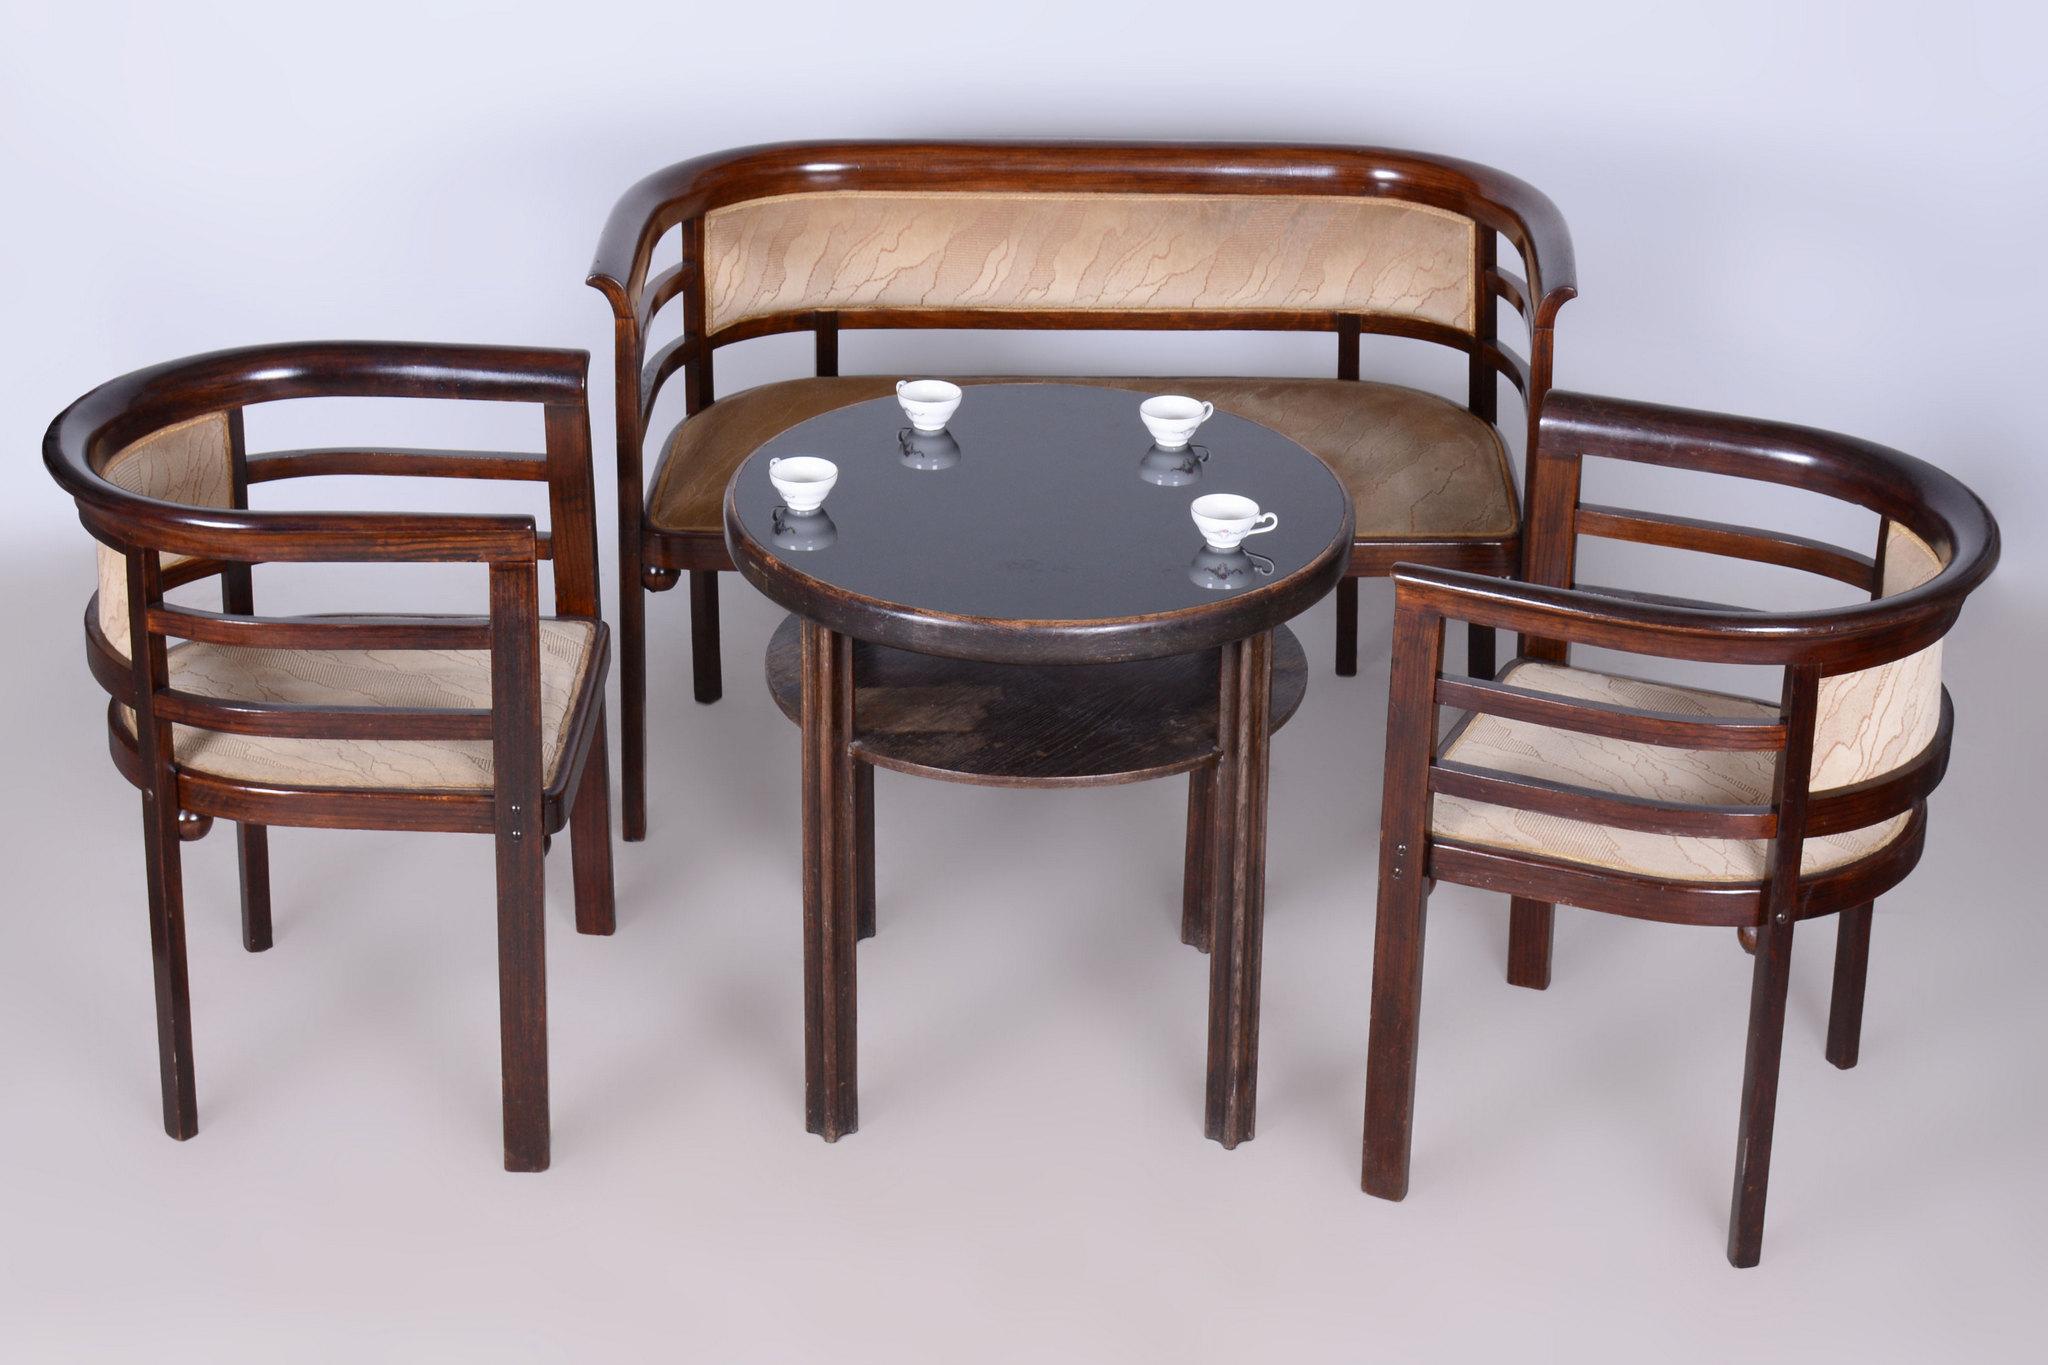 Restored Art Deco Small Table, by J. Hoffmann, Wiener Werkstätte, Czech, 1910s In Good Condition For Sale In Horomerice, CZ